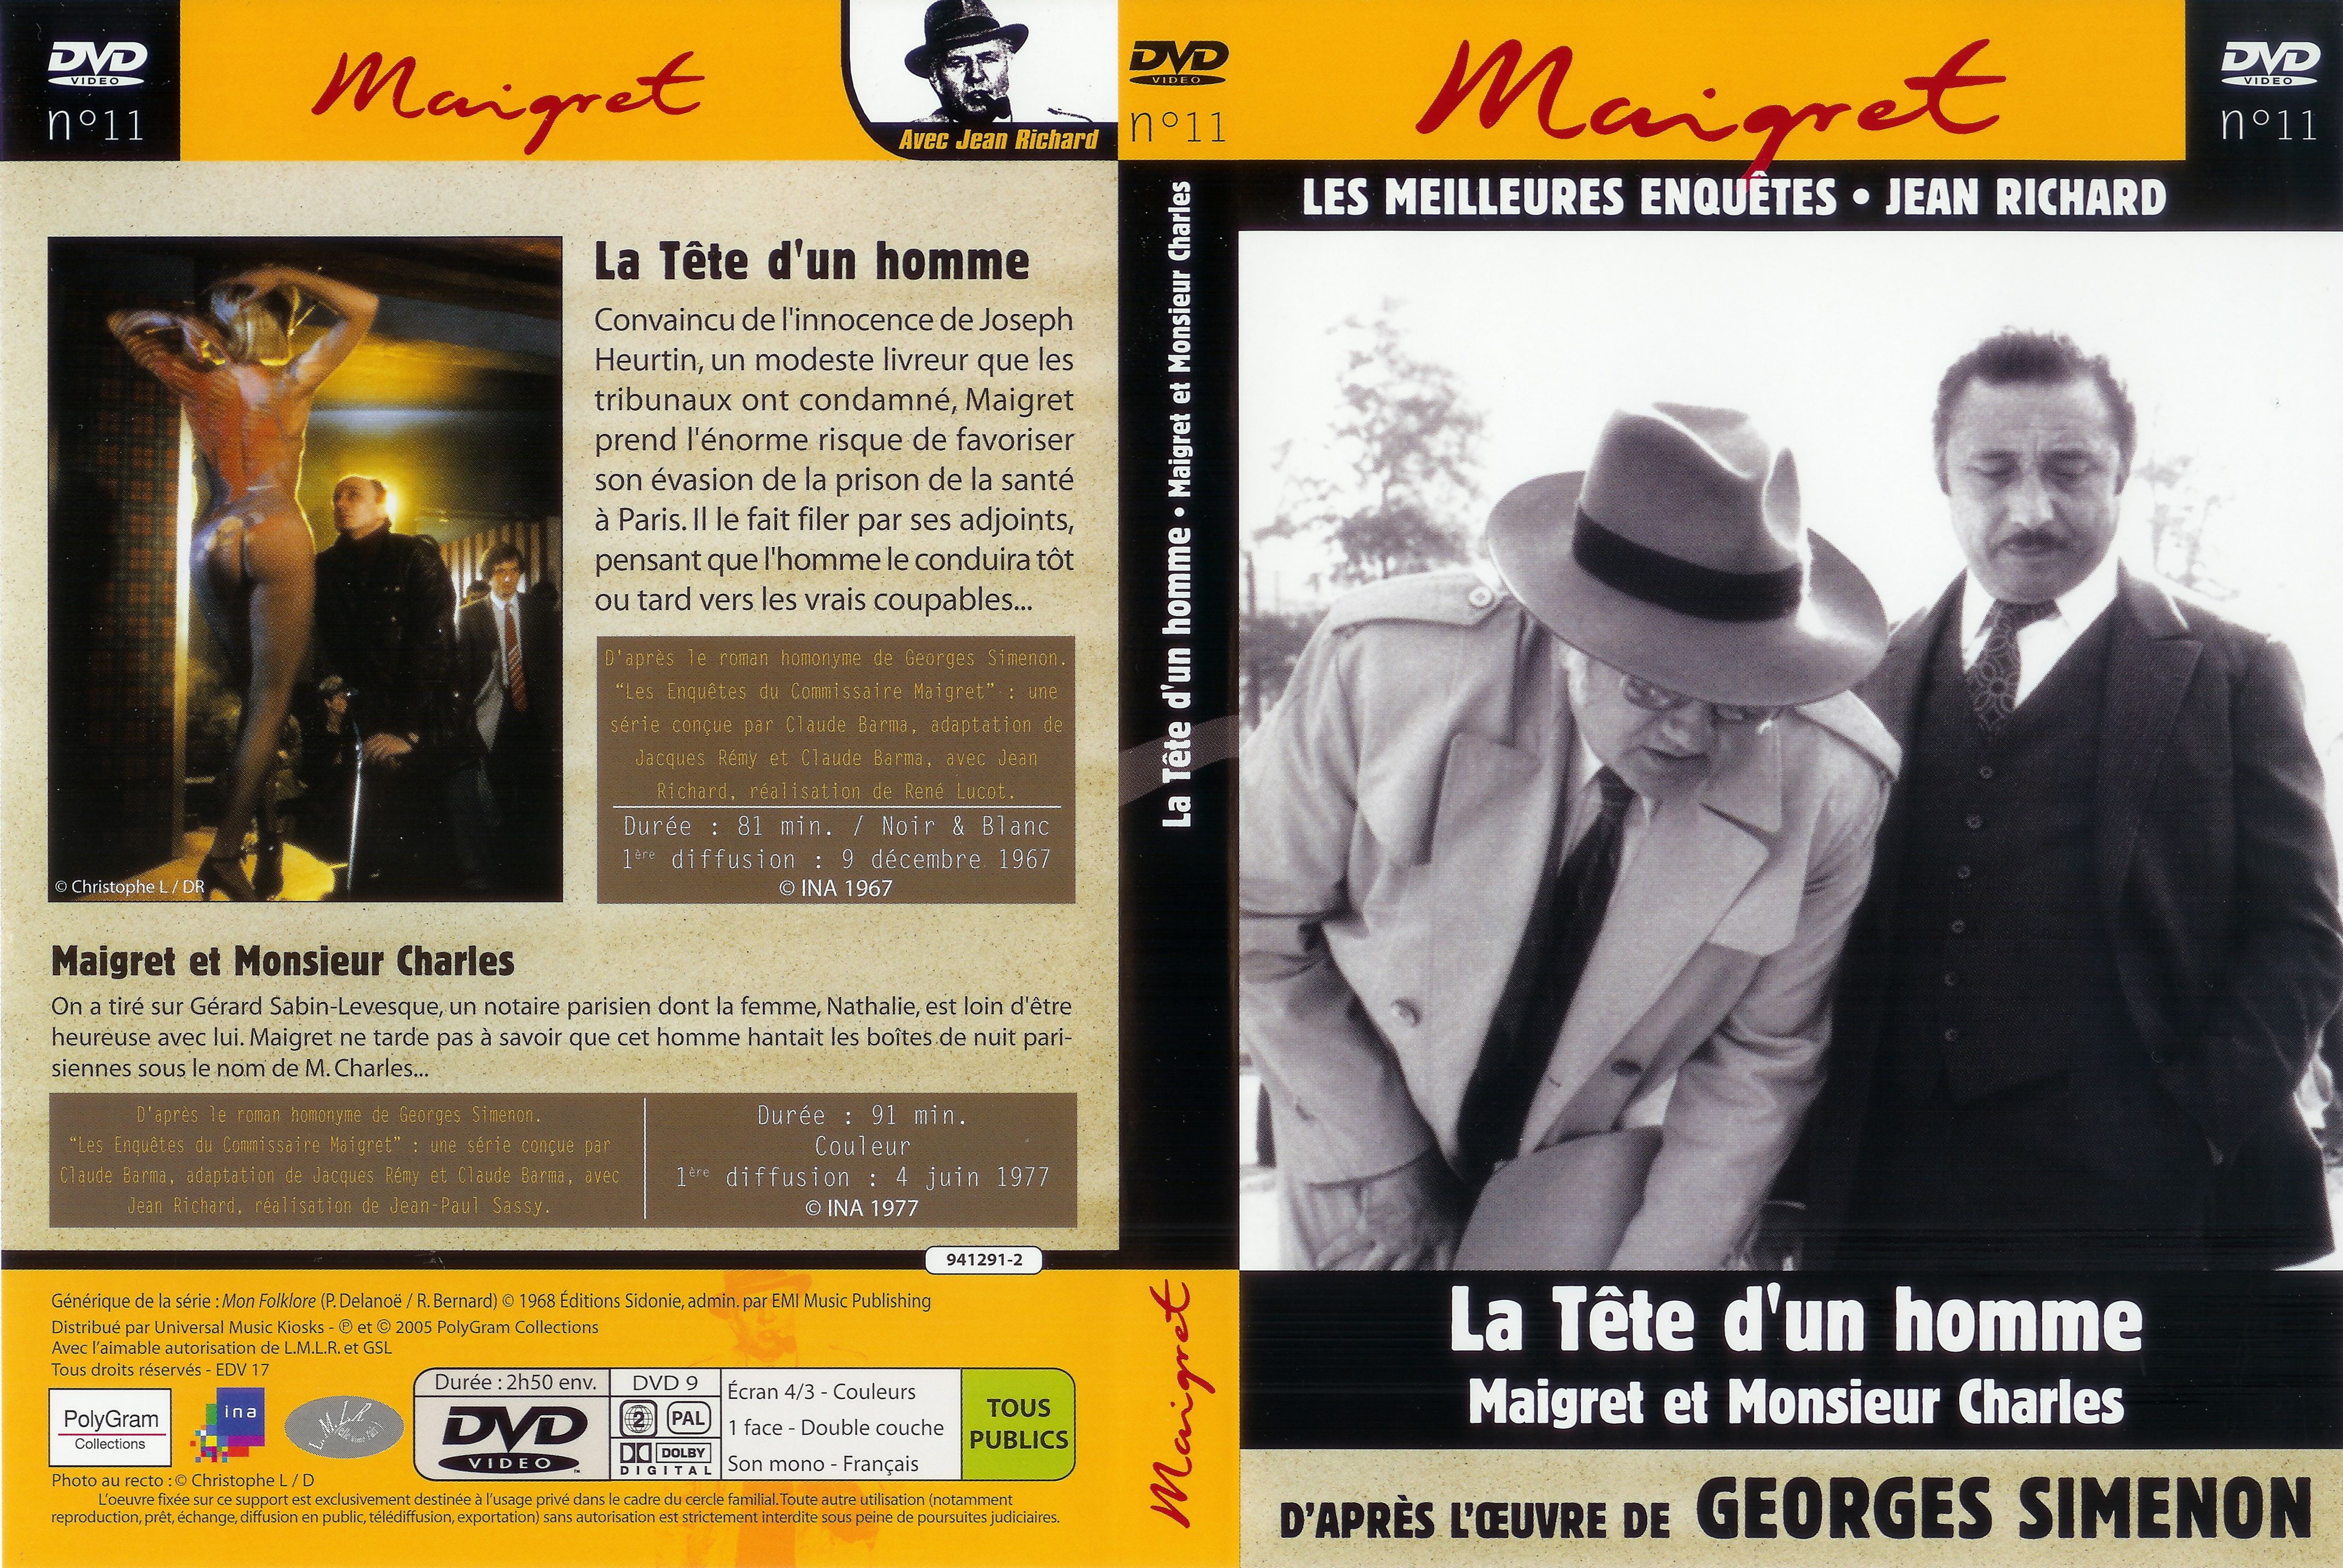 Jaquette DVD Maigret (Jean Richard) vol 11